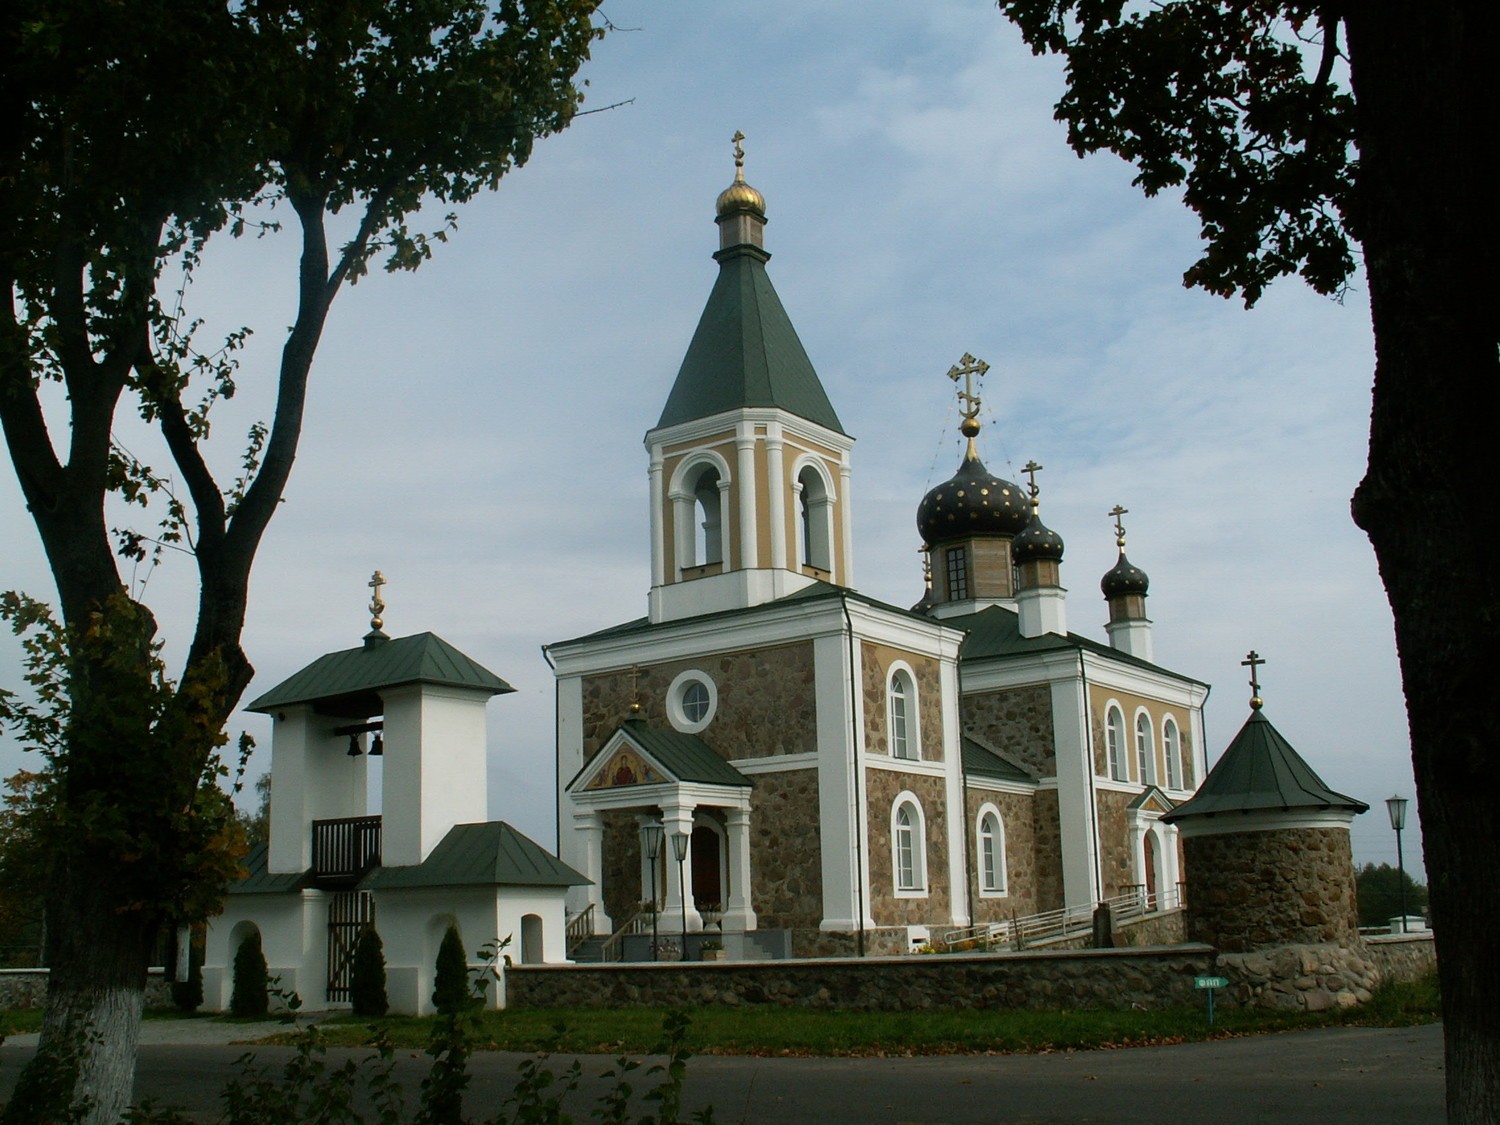 Проект храма - реставрация из руин д. Почапово